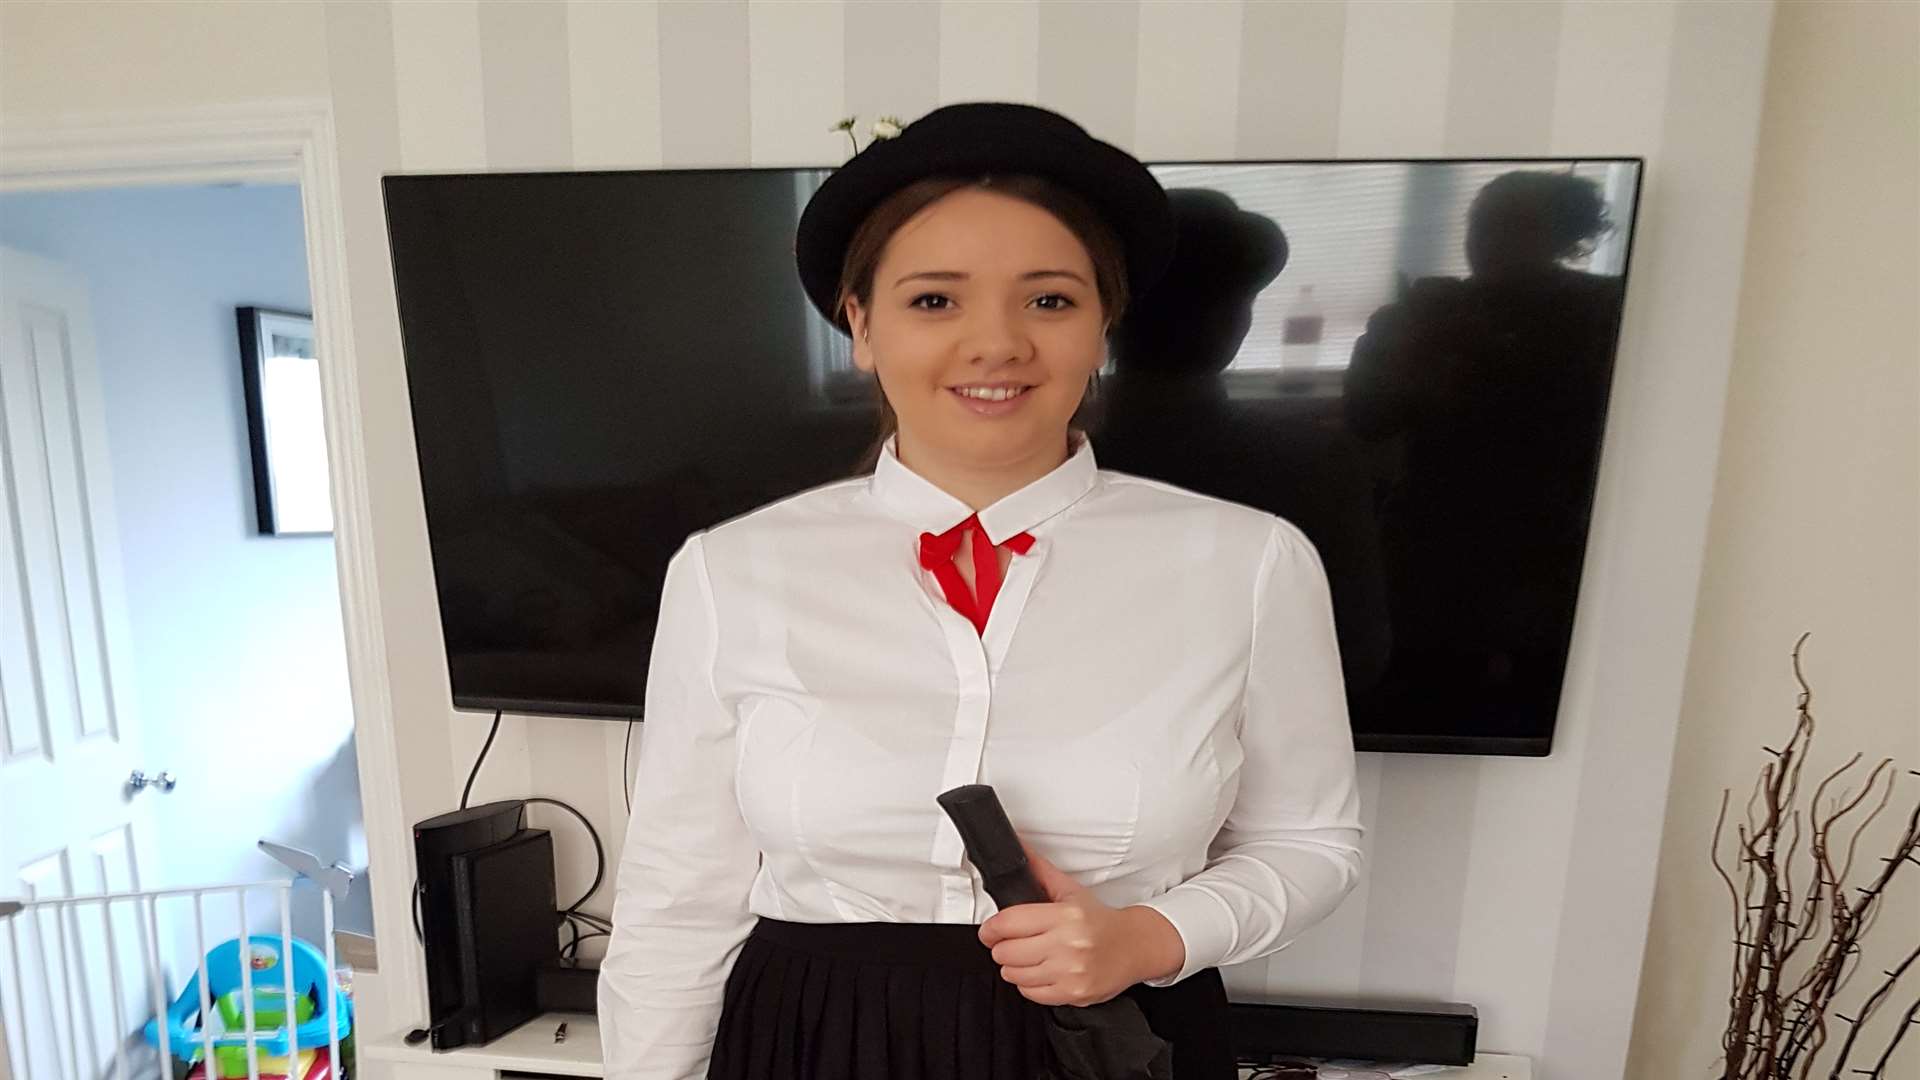 Megan Davis off to teach at school as Mary Poppins